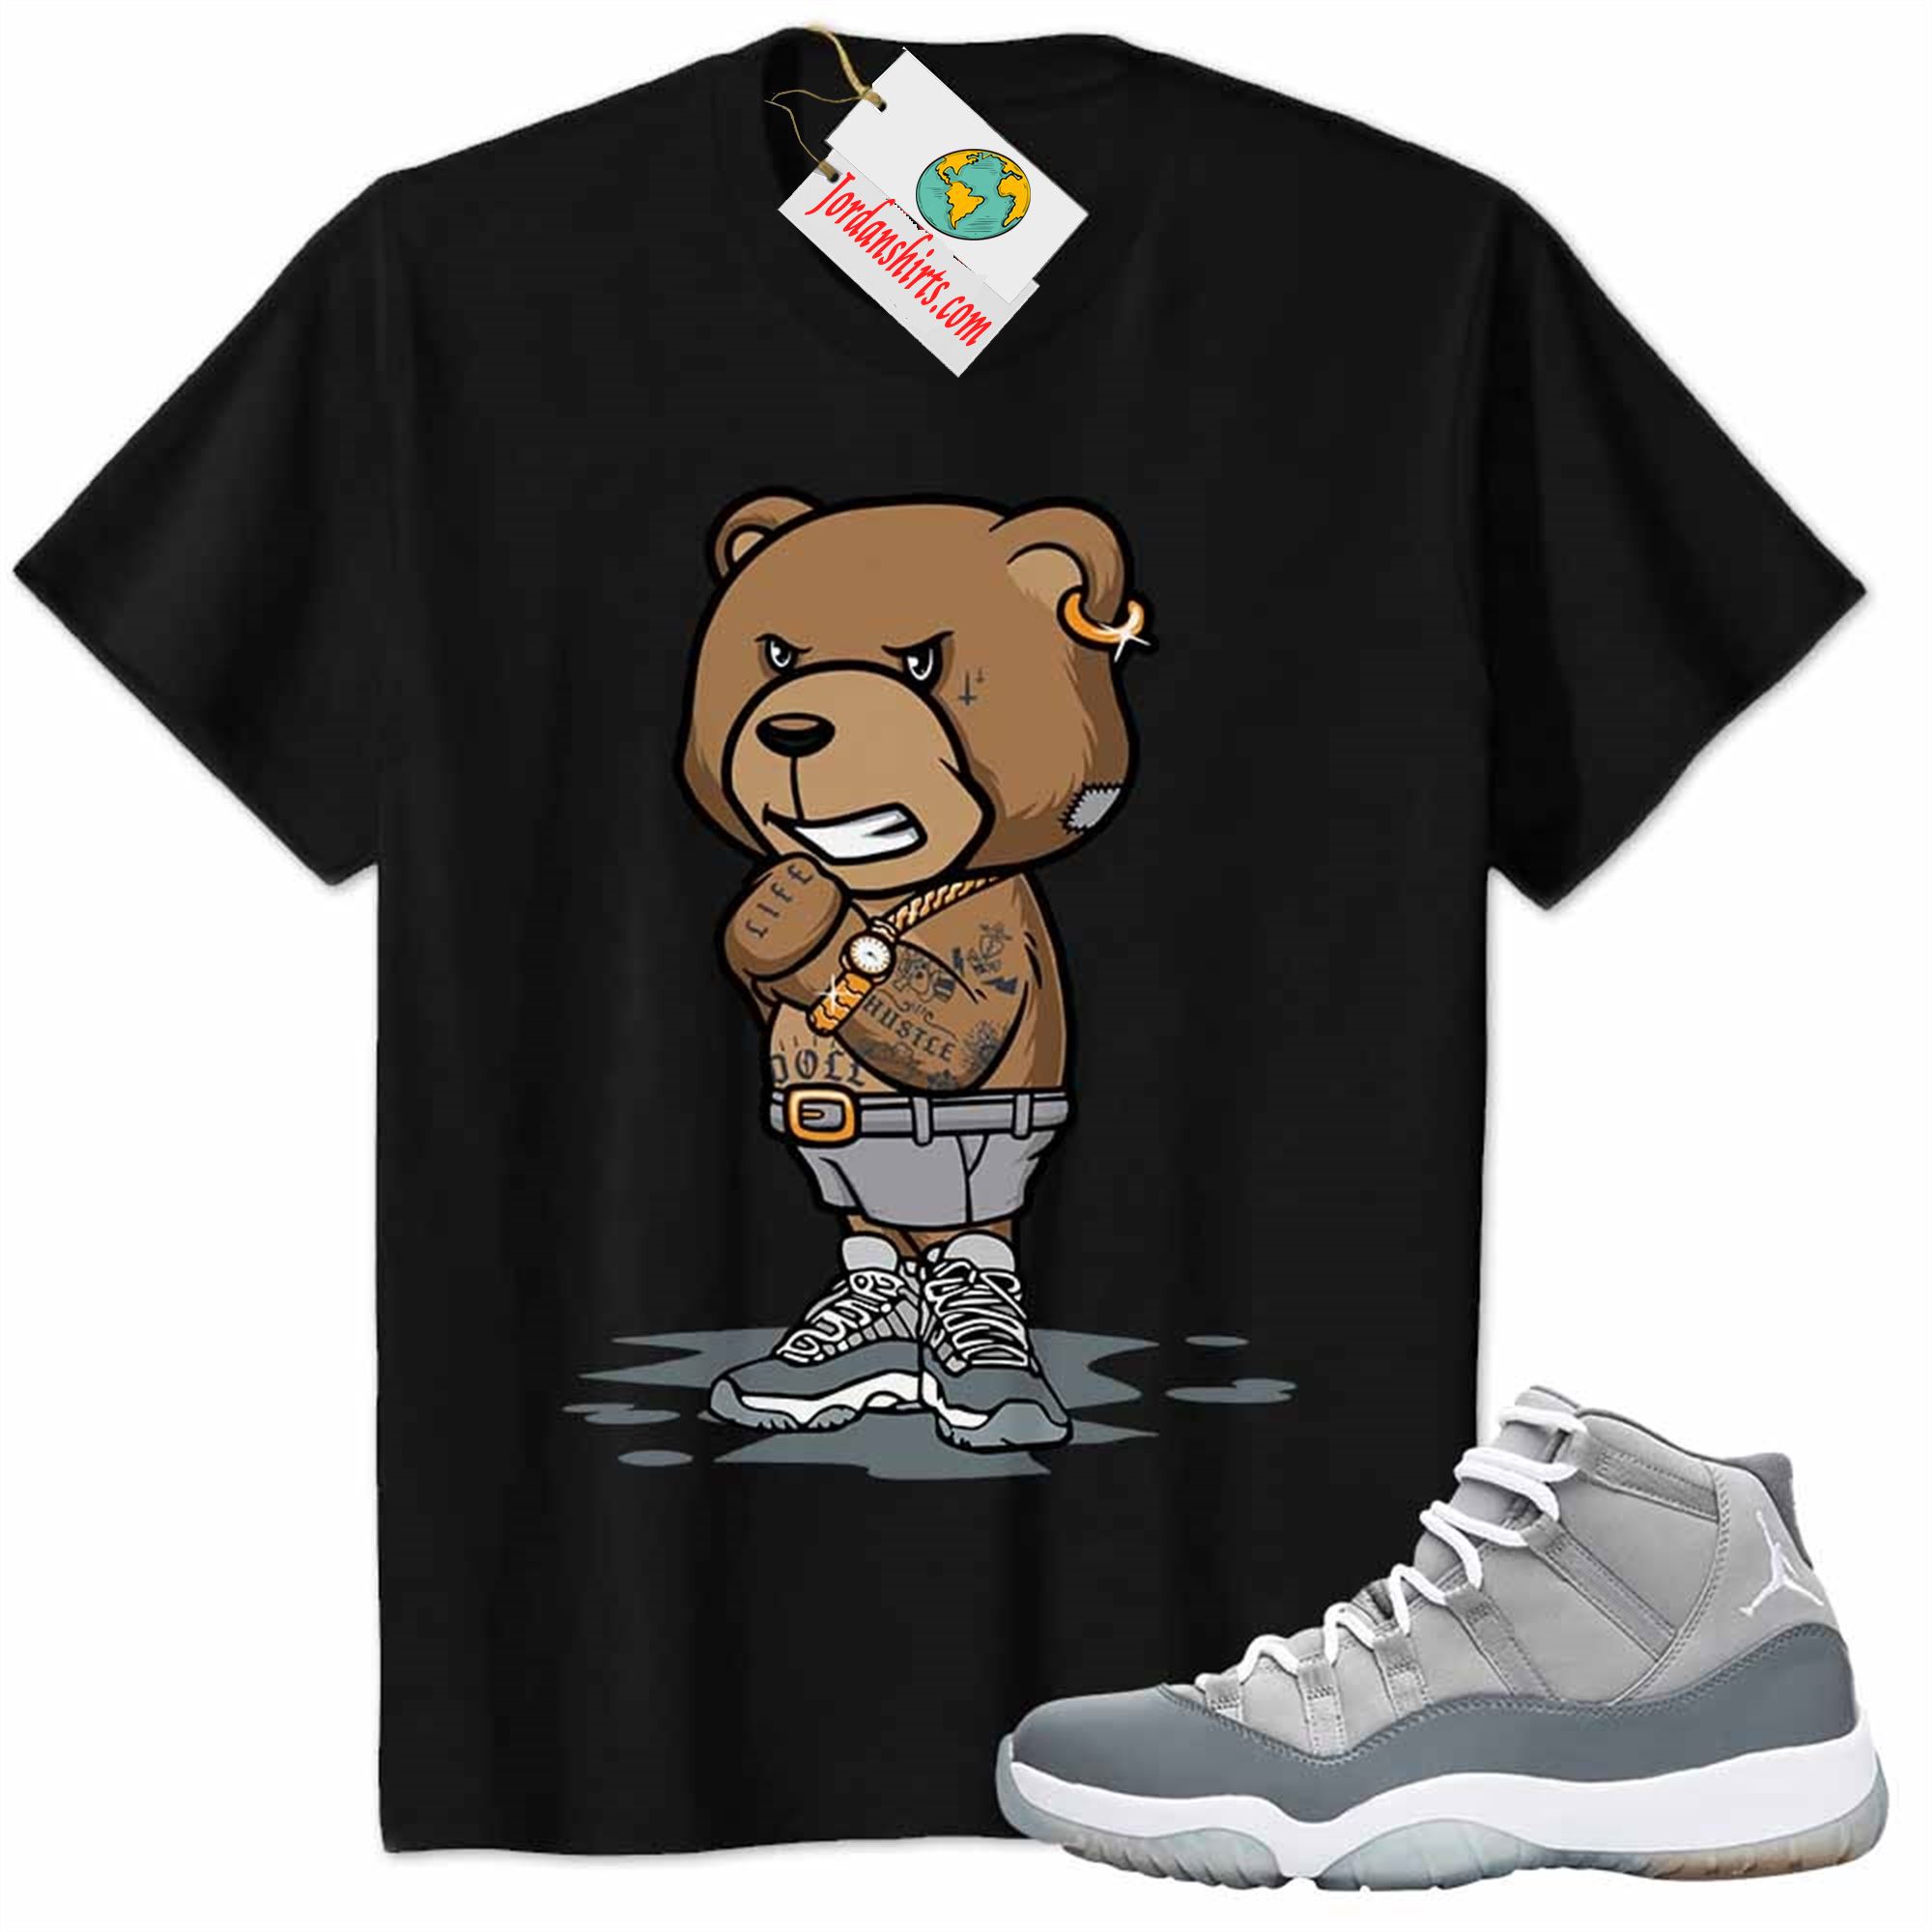 Jordan 11 Shirt, Rich Teddy Bear Hustle With Tattoo Black Air Jordan 11 Cool Grey 11s Plus Size Up To 5xl